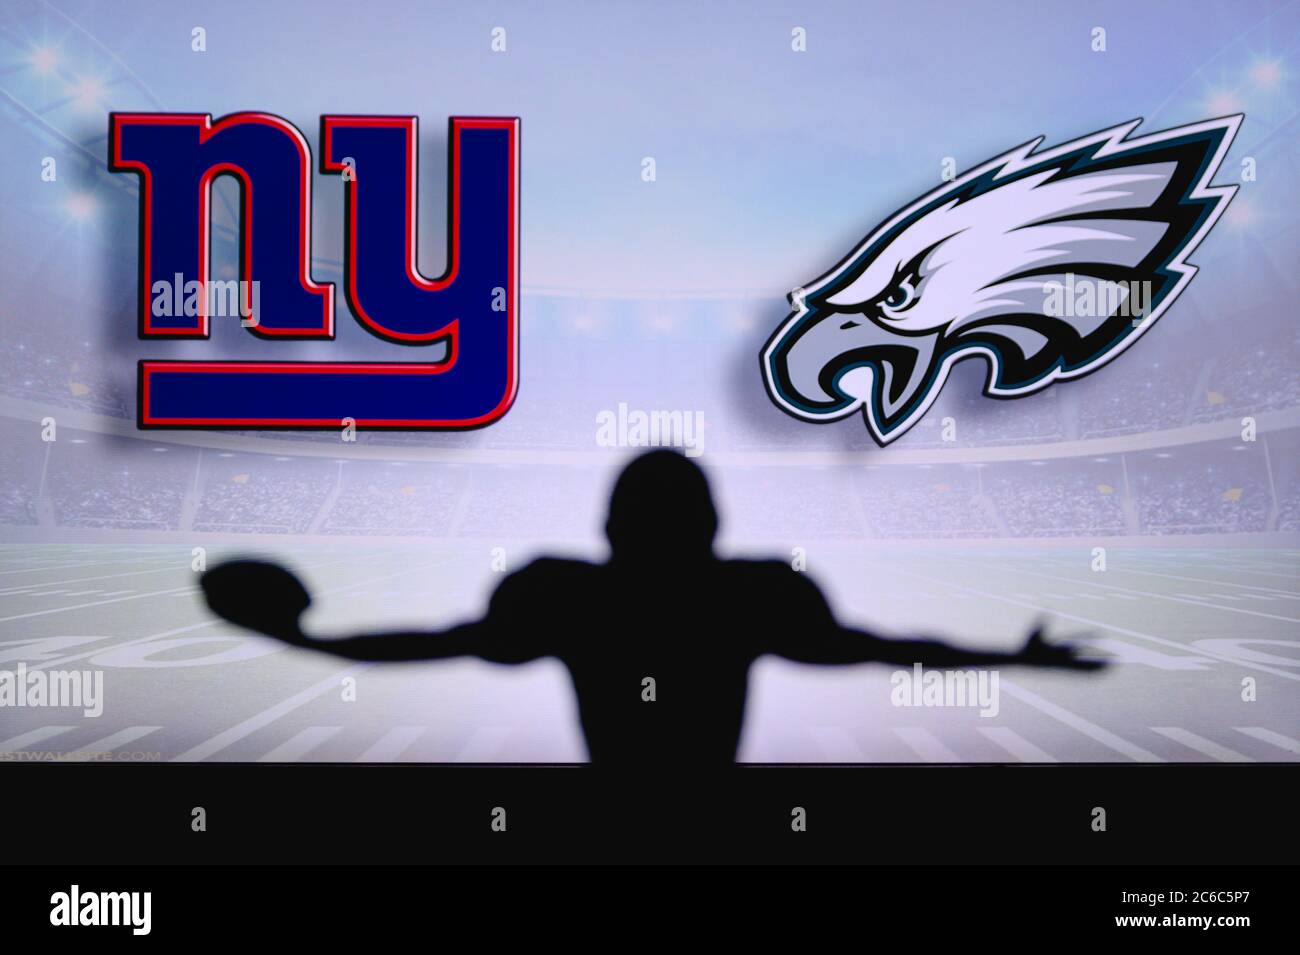 New York Giants Gegen Philadelphia Eagles Nfl Spiel American Football League Spiel Silhouette Des Professionellen Spieler Feiern Touch Down Bildschirm In B Stockfotografie Alamy